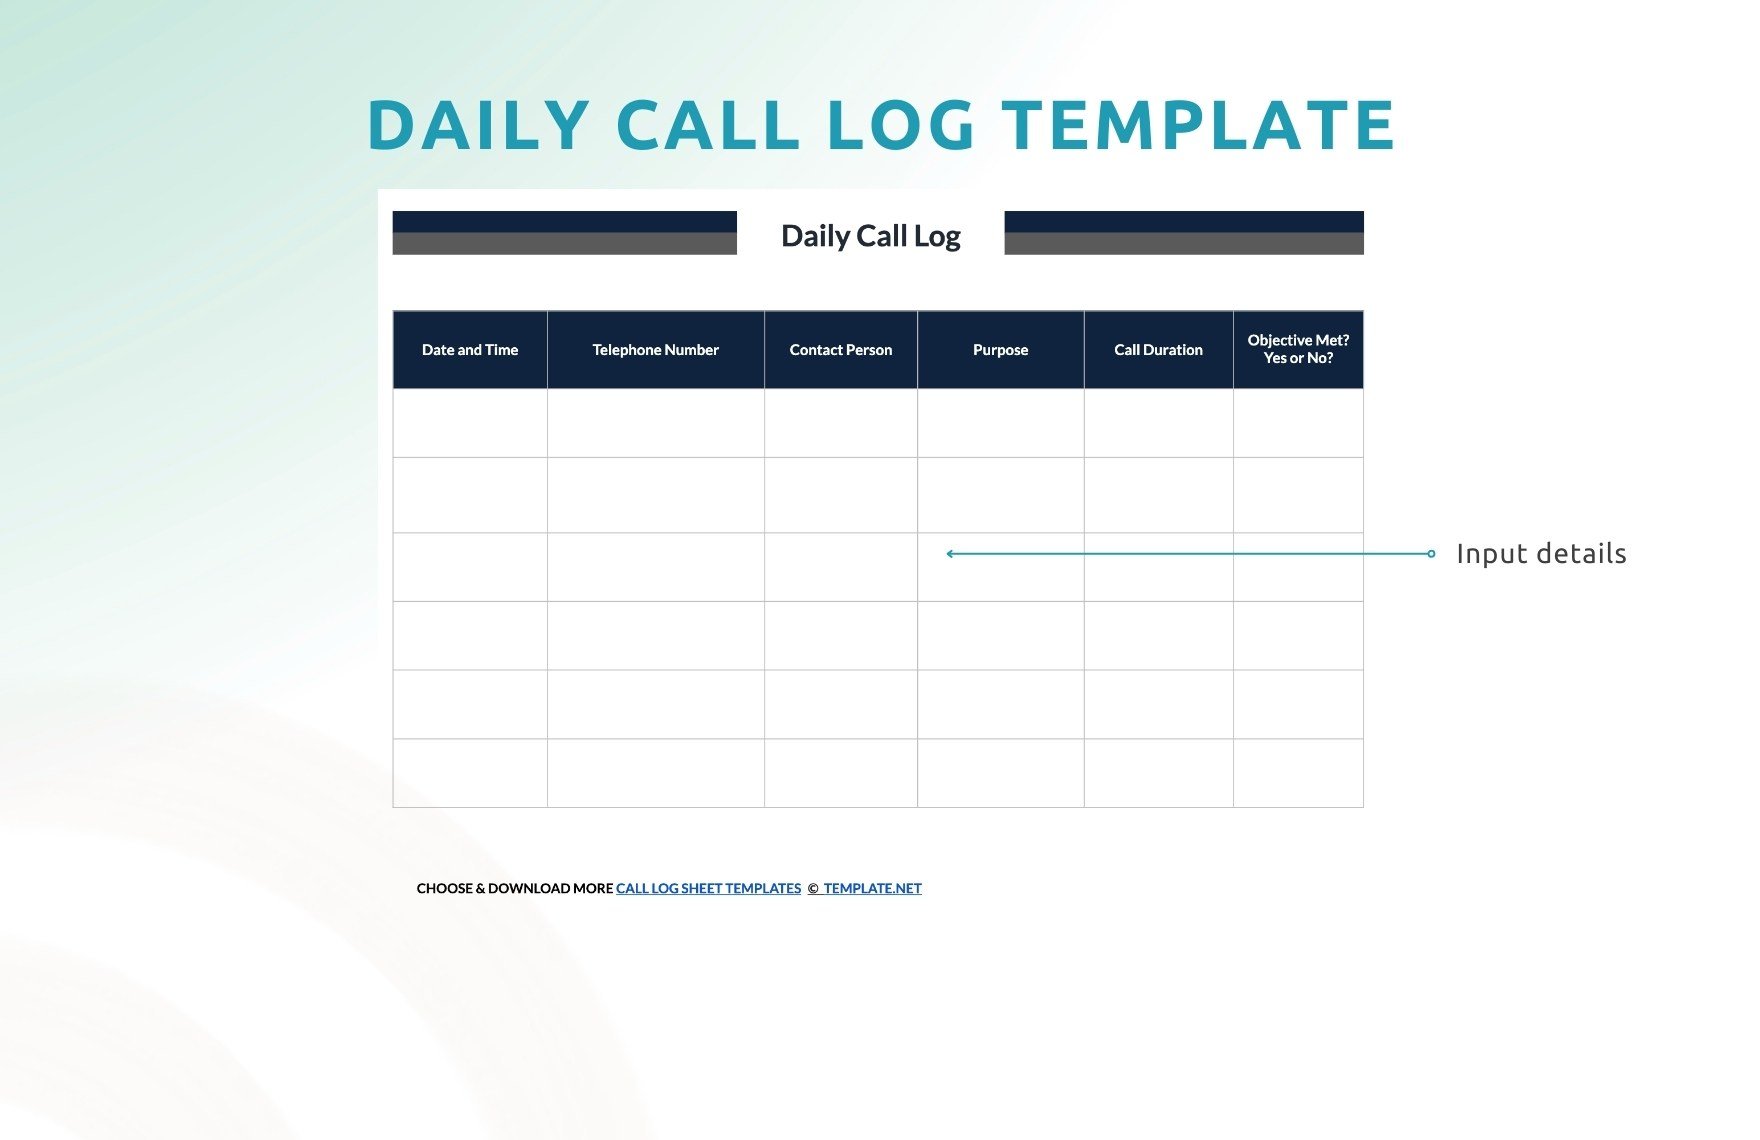 Daily Call Log Template